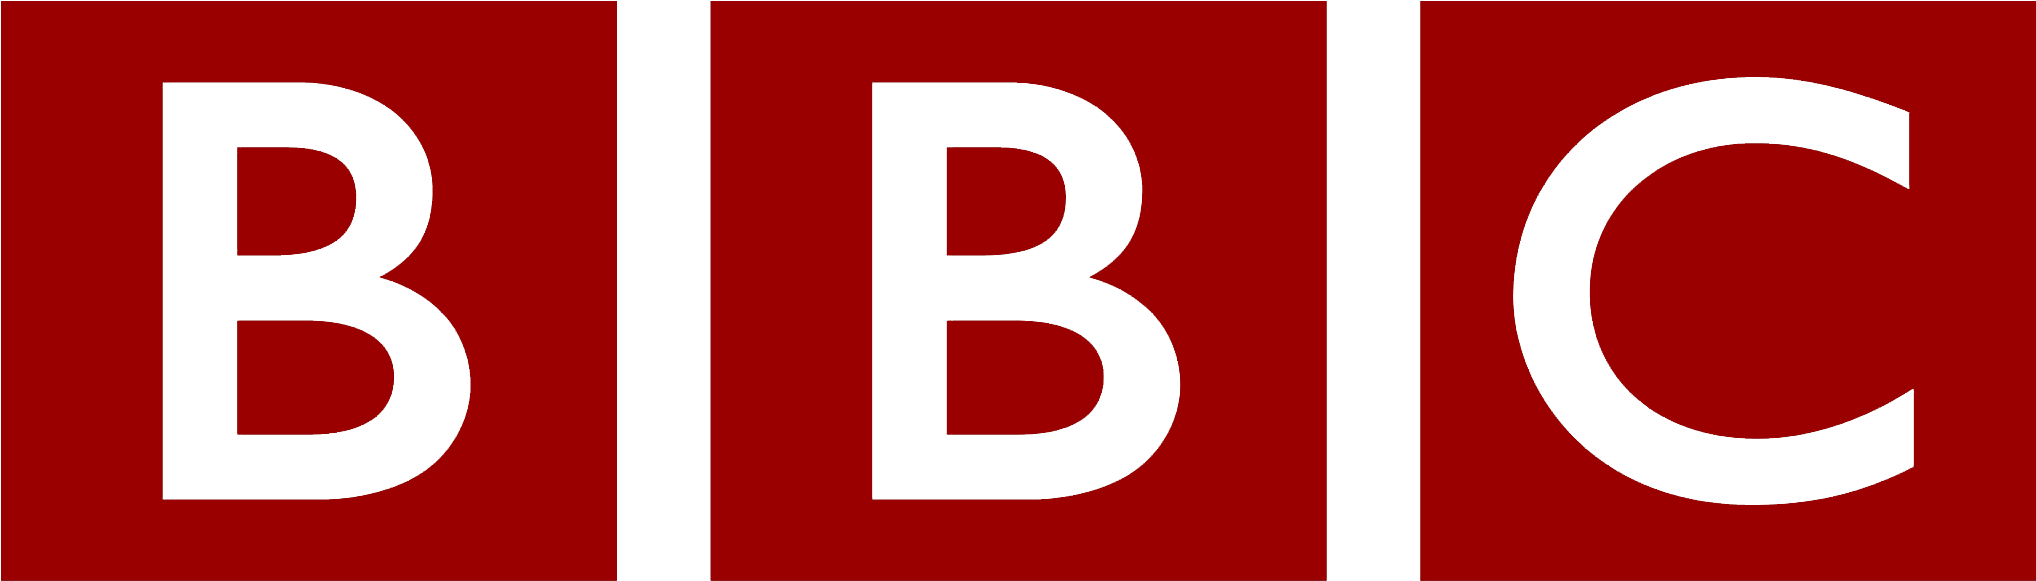 Bbc Logo PNG Clipart